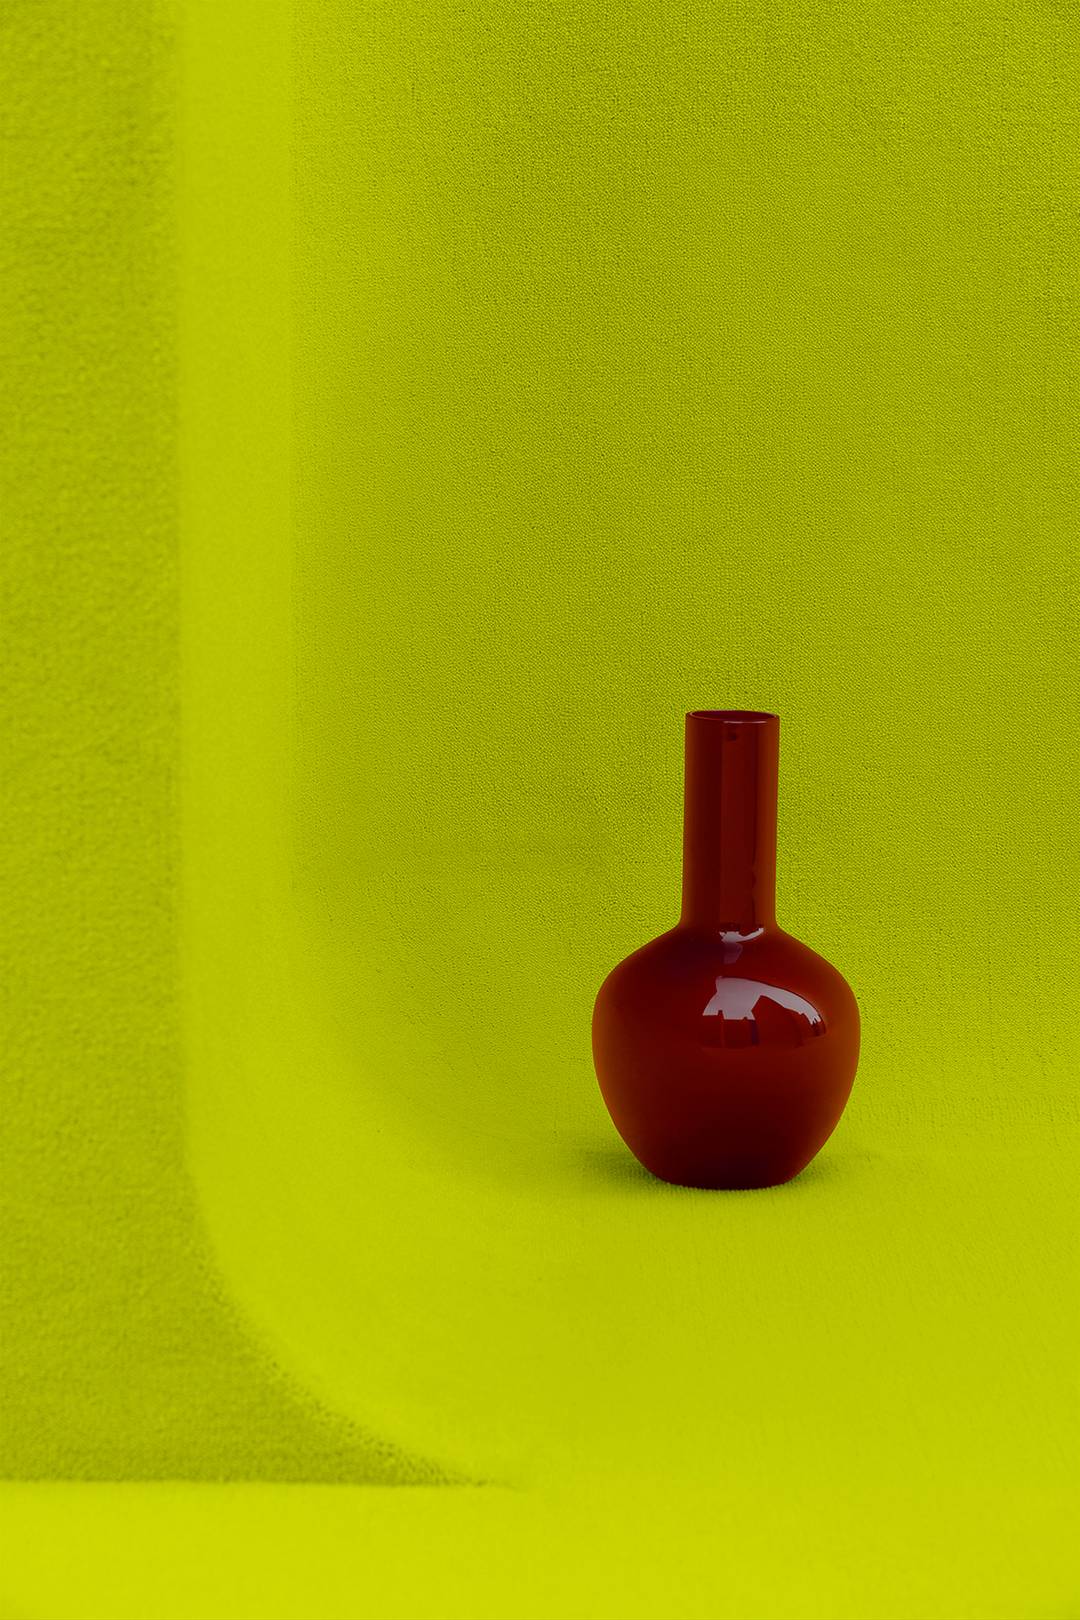 The Opachi vase by Tobia Scarpa